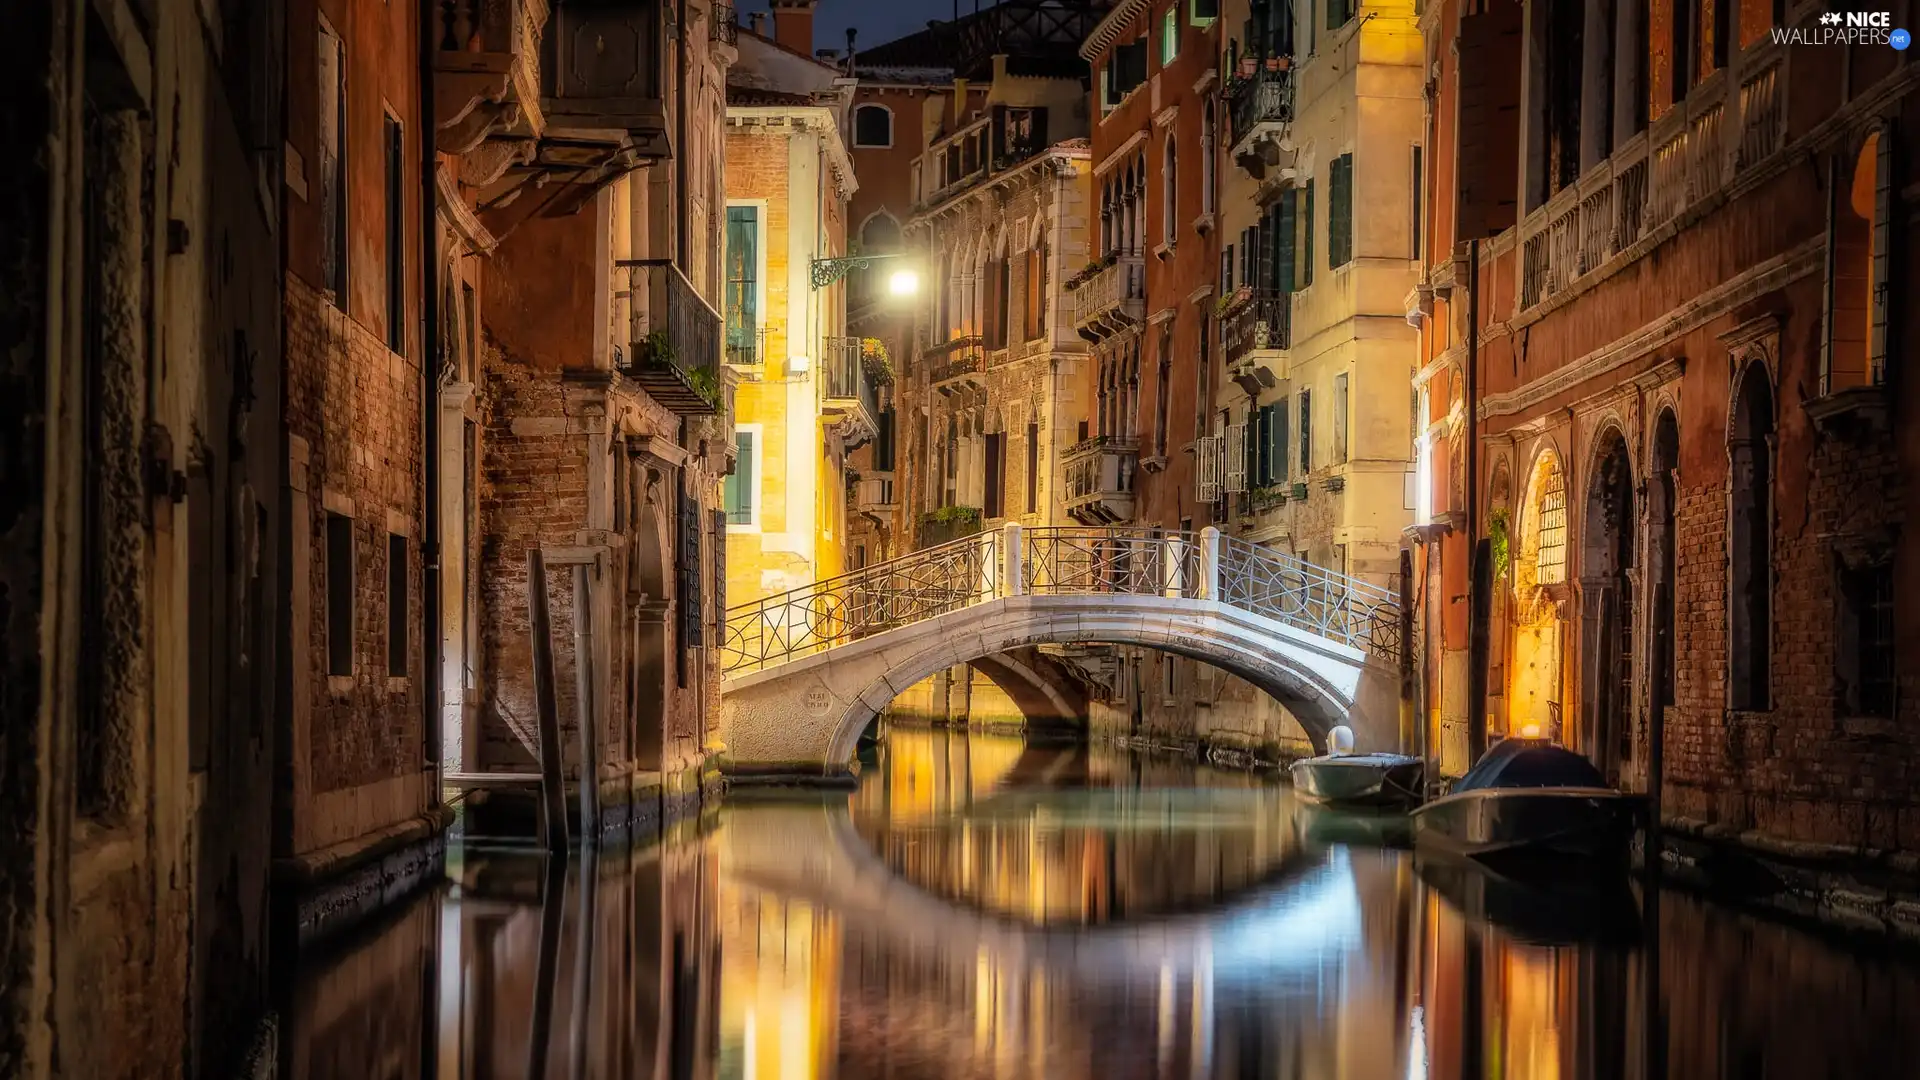 boats, Italy, bridge, Houses, sun, Night, luminosity, canal, Venice, flash, ligh